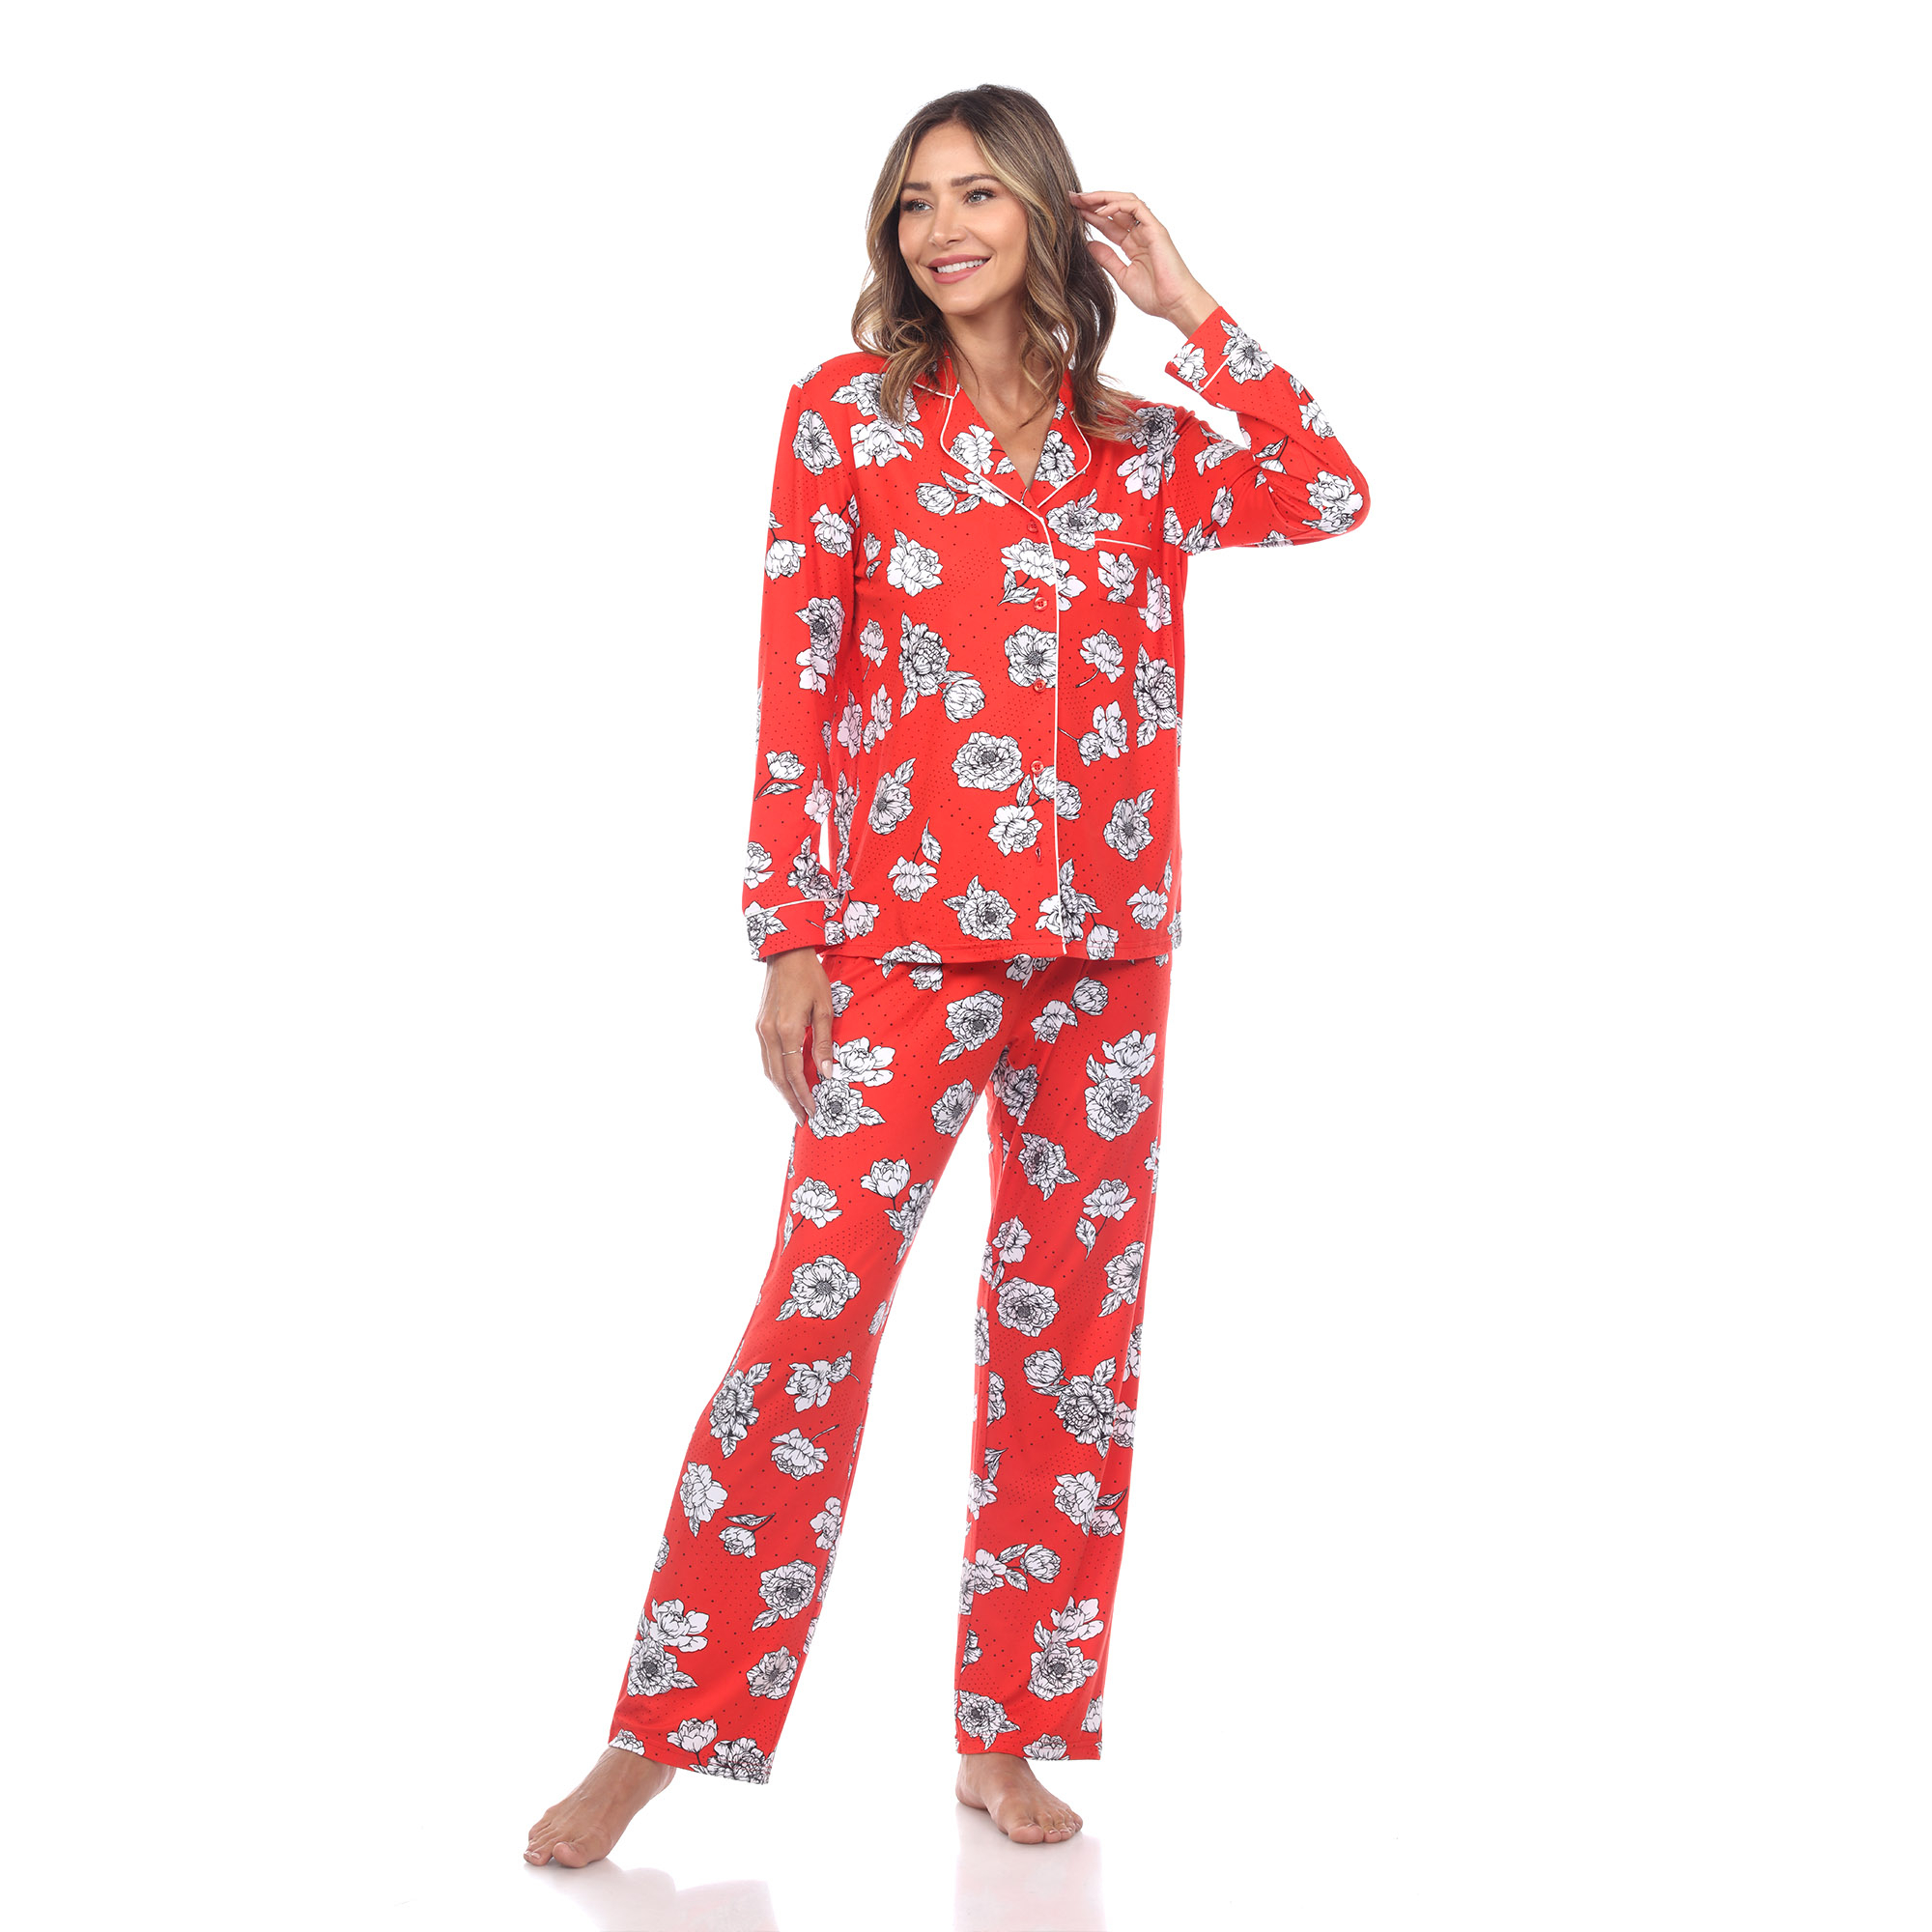 White Mark Women's Long Sleeve Floral Pajama Set - Red, Large